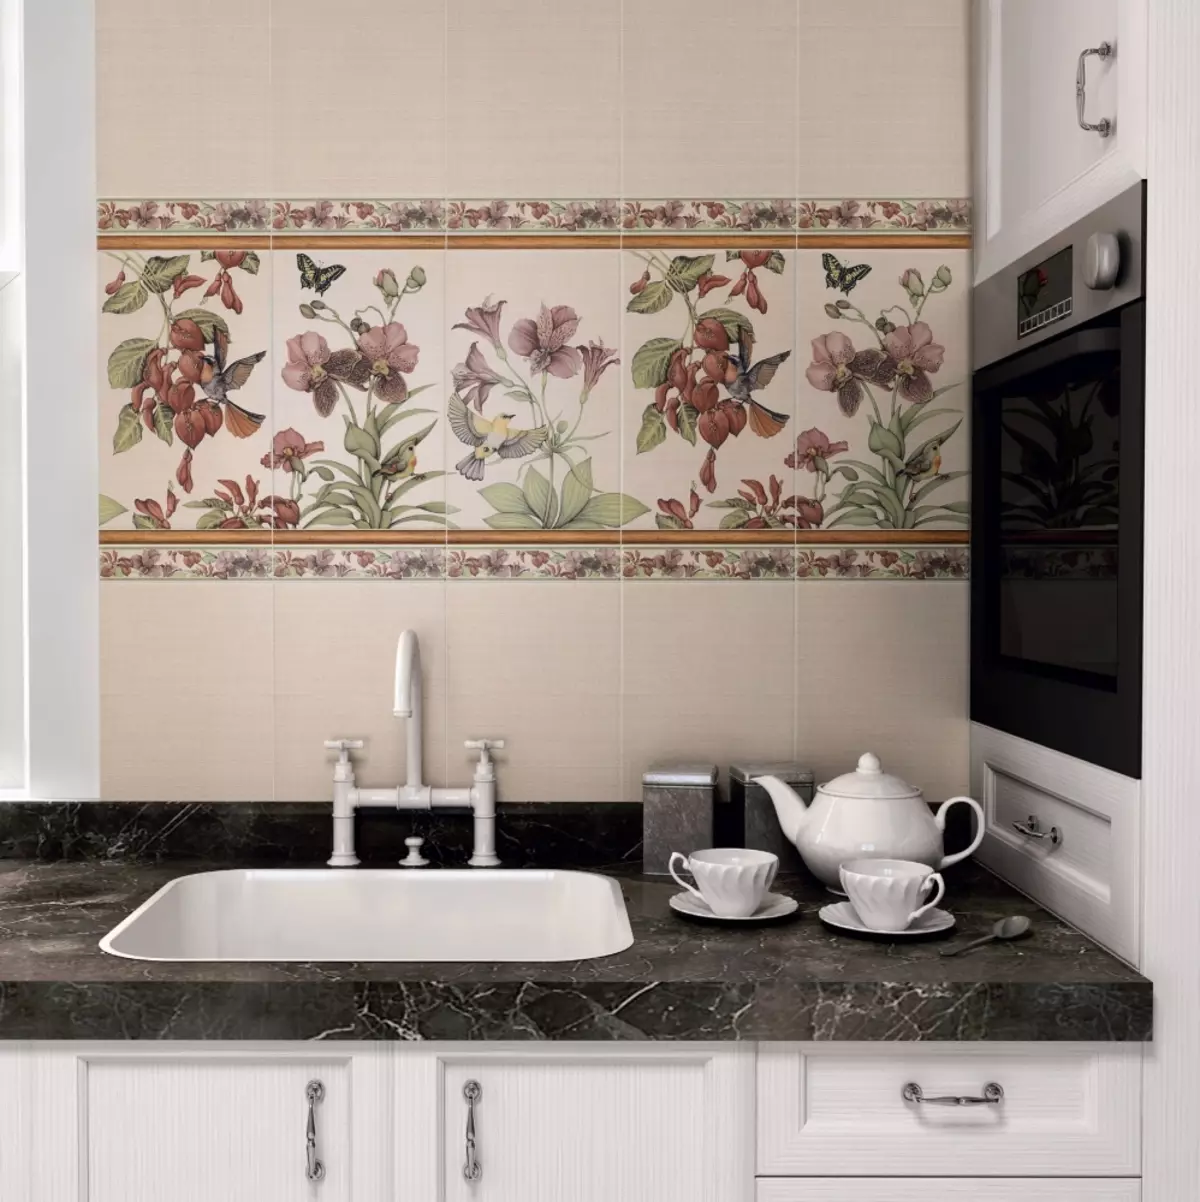 Kerama Marazzi Tile on the kitchenエプロン（37枚の写真）：キッチンエプロンのデザインのCabanchik Tile、キッチンインテリアのタイルコレクション 